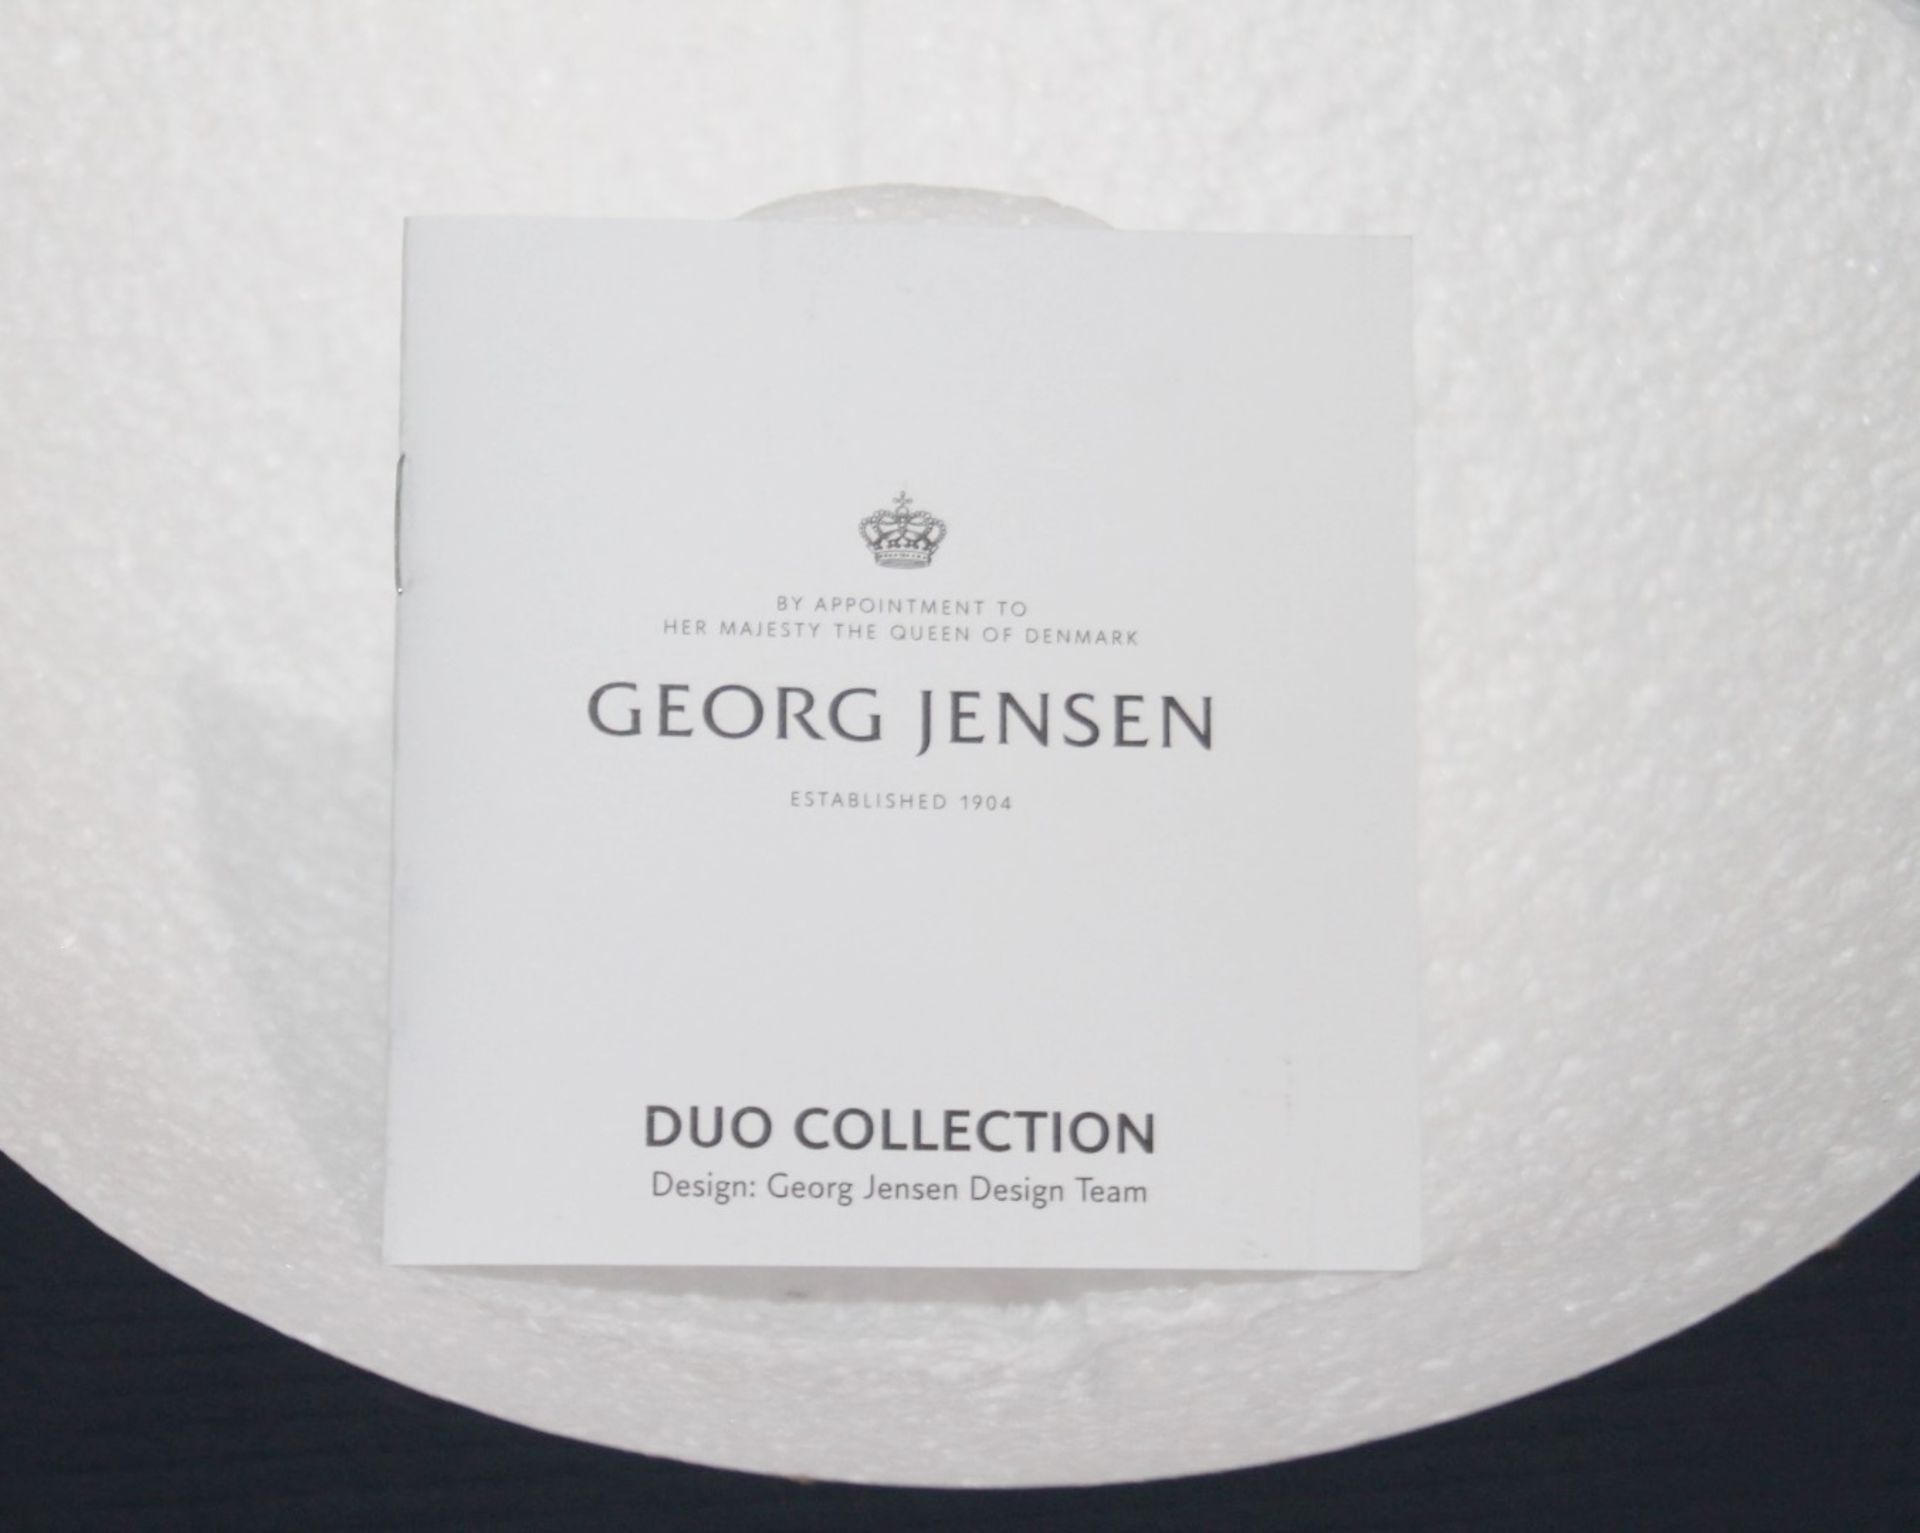 1 x GEORG JENSEN 'Duo' Round Artisan Glass Vase With Steel Collar (Medium) - Original Price £159. - Image 7 of 8